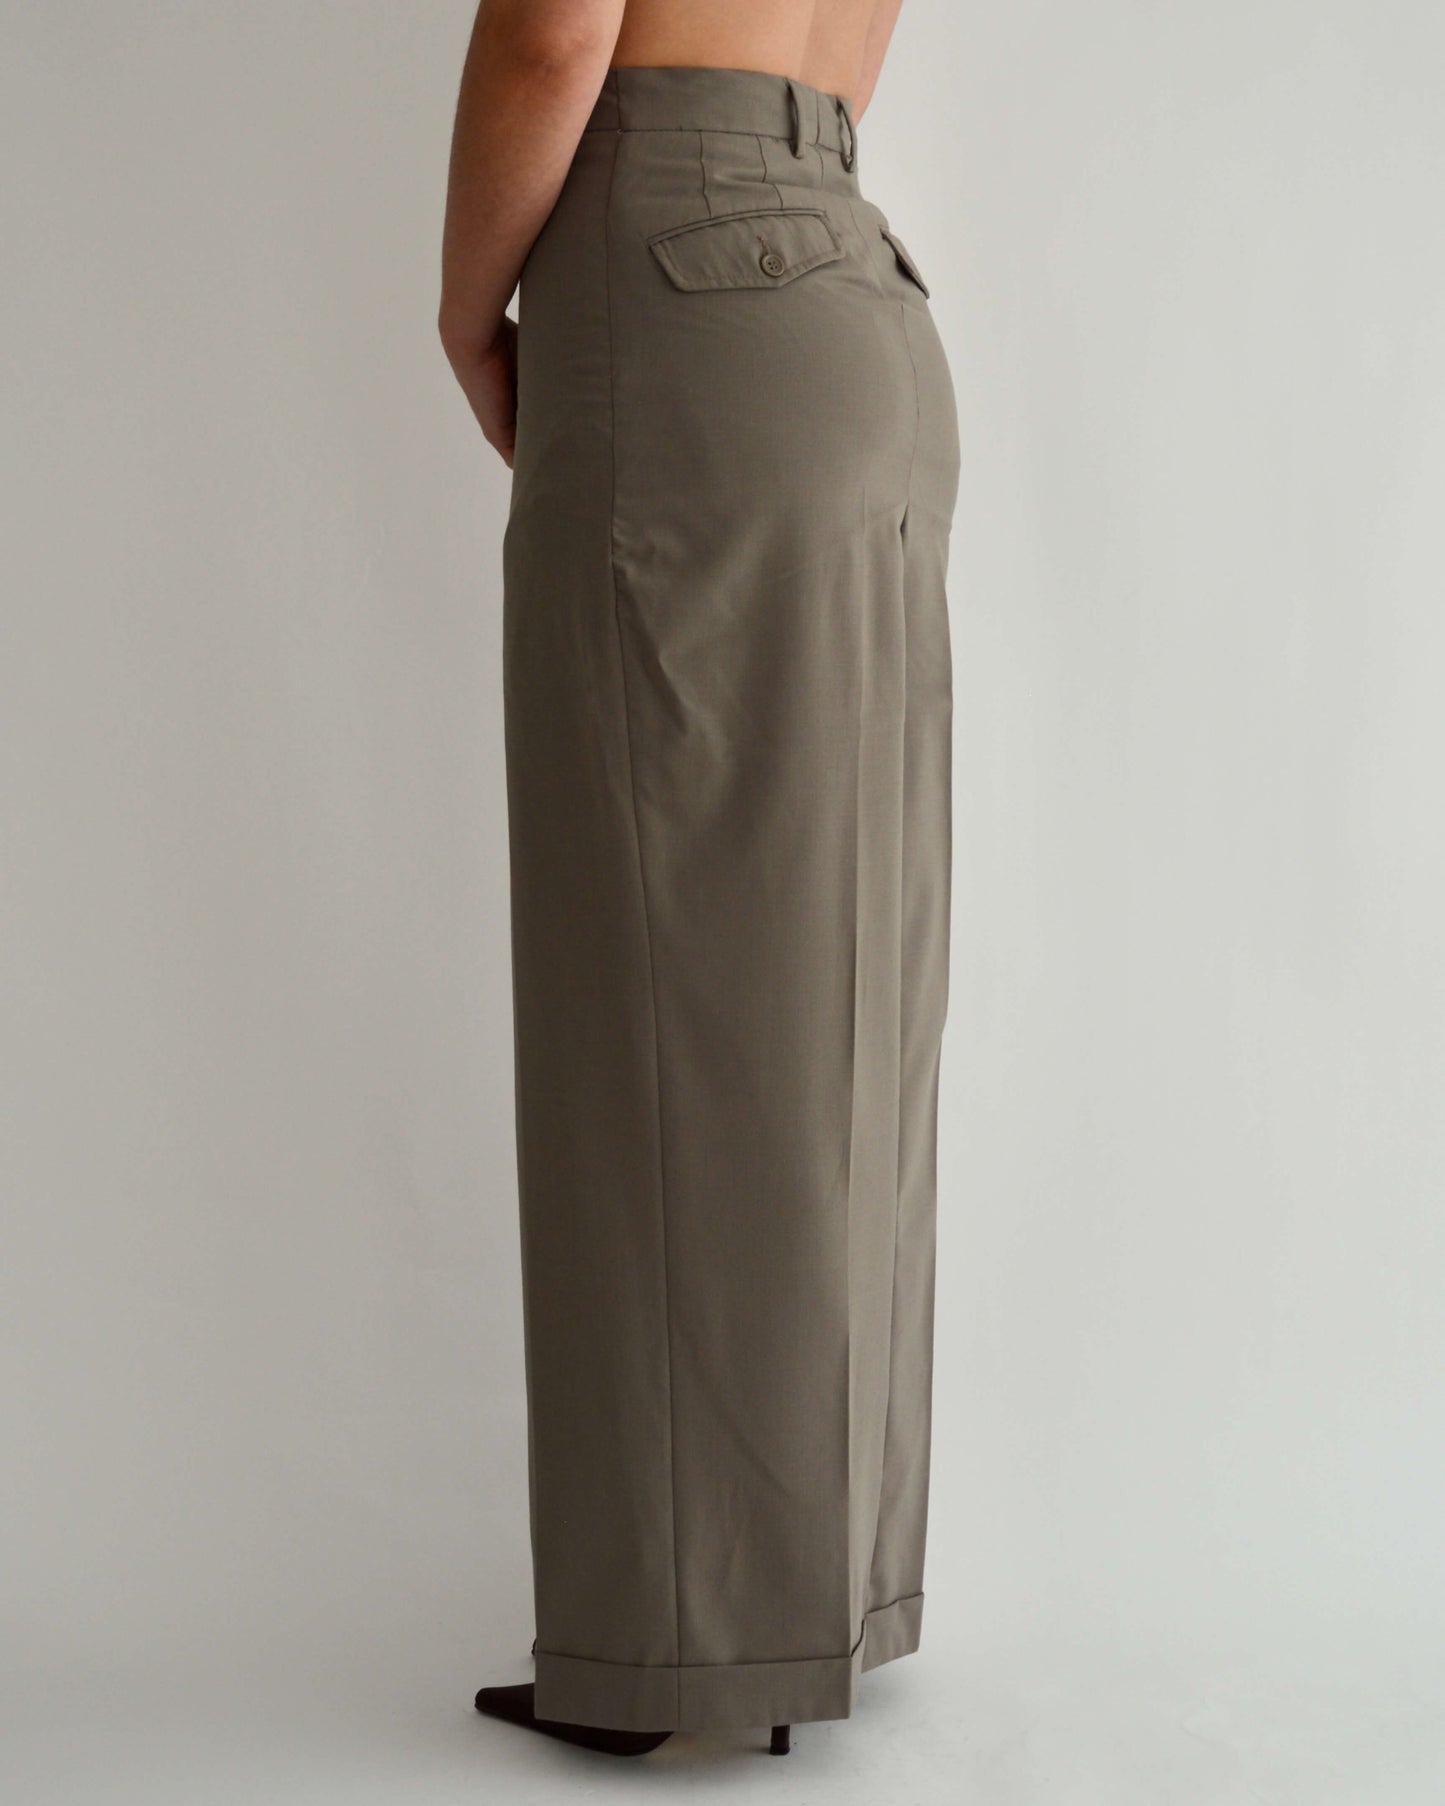 Long Skirt - Camo Brown (S/M)